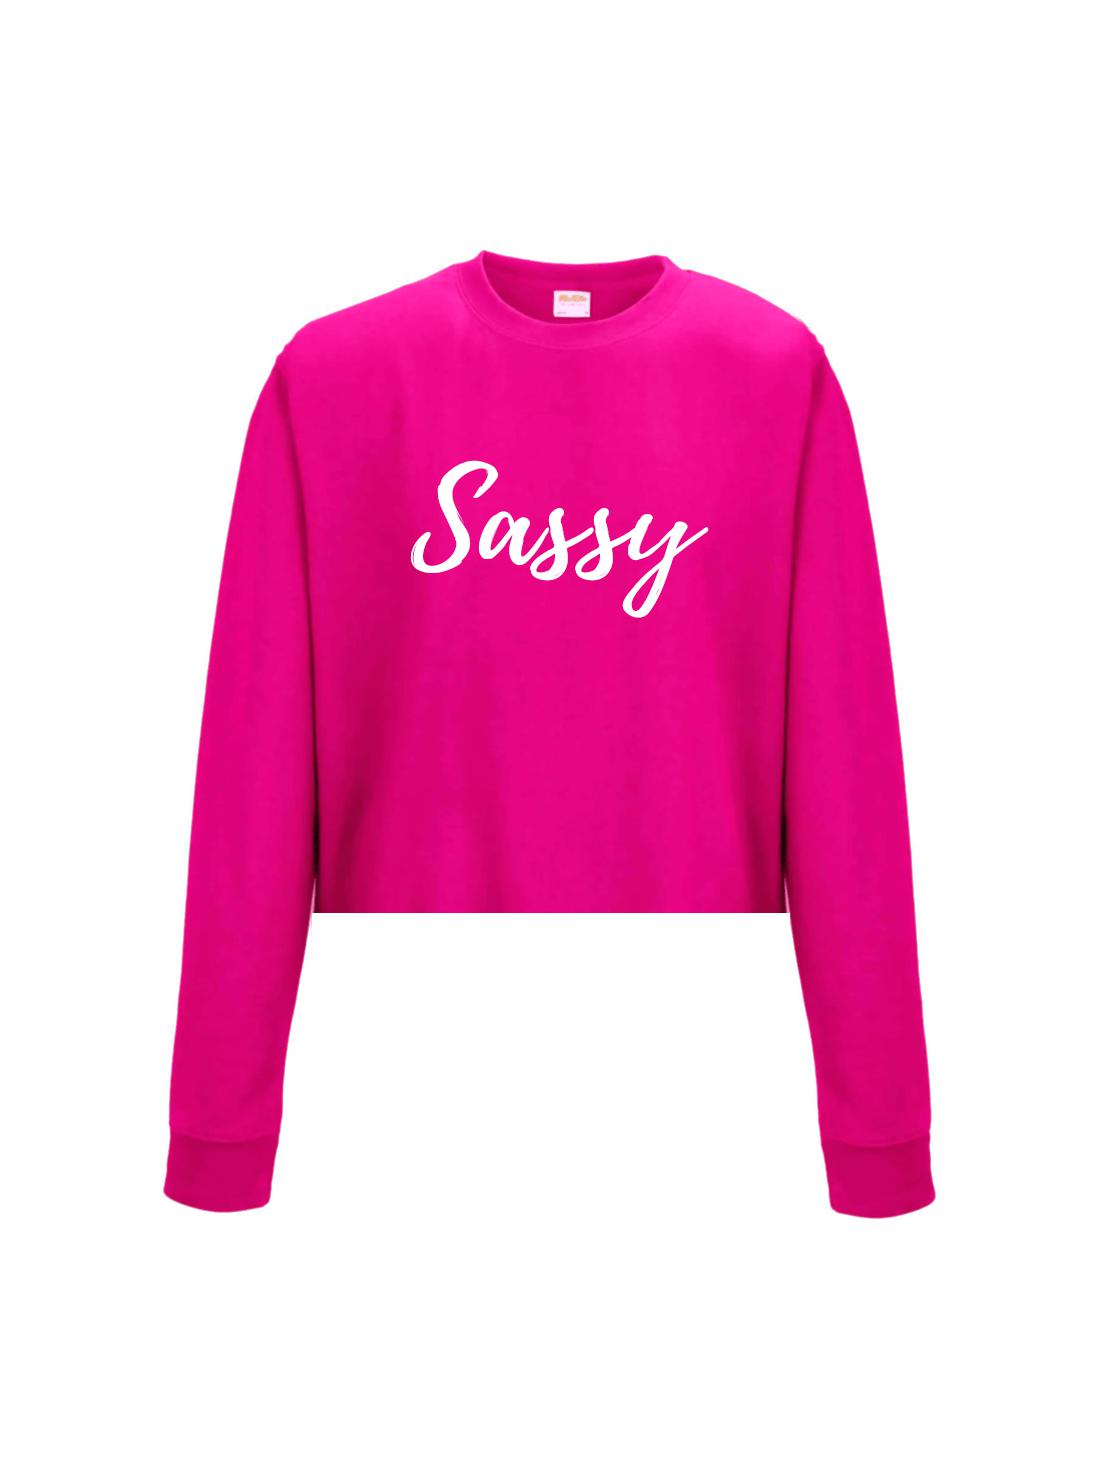 SASSY cropped sweatshirt